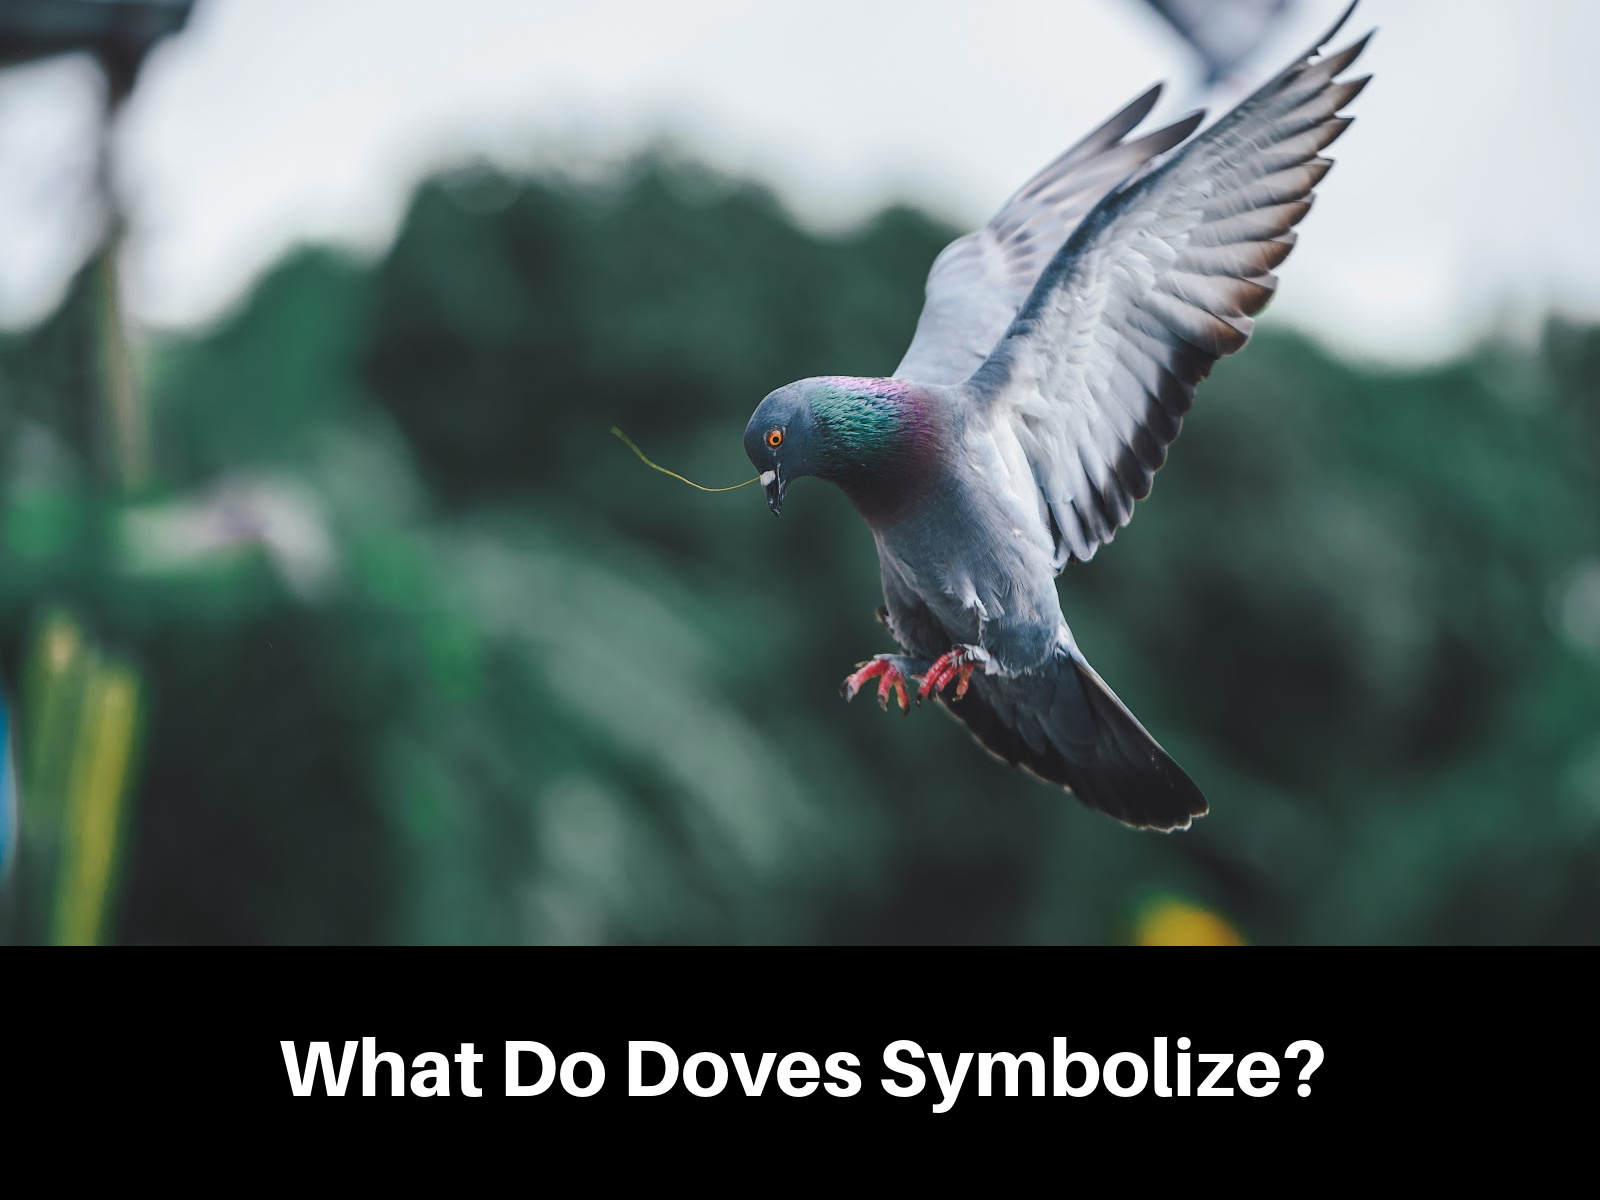 Dove Symbolism - Wêrom sjogge jo se